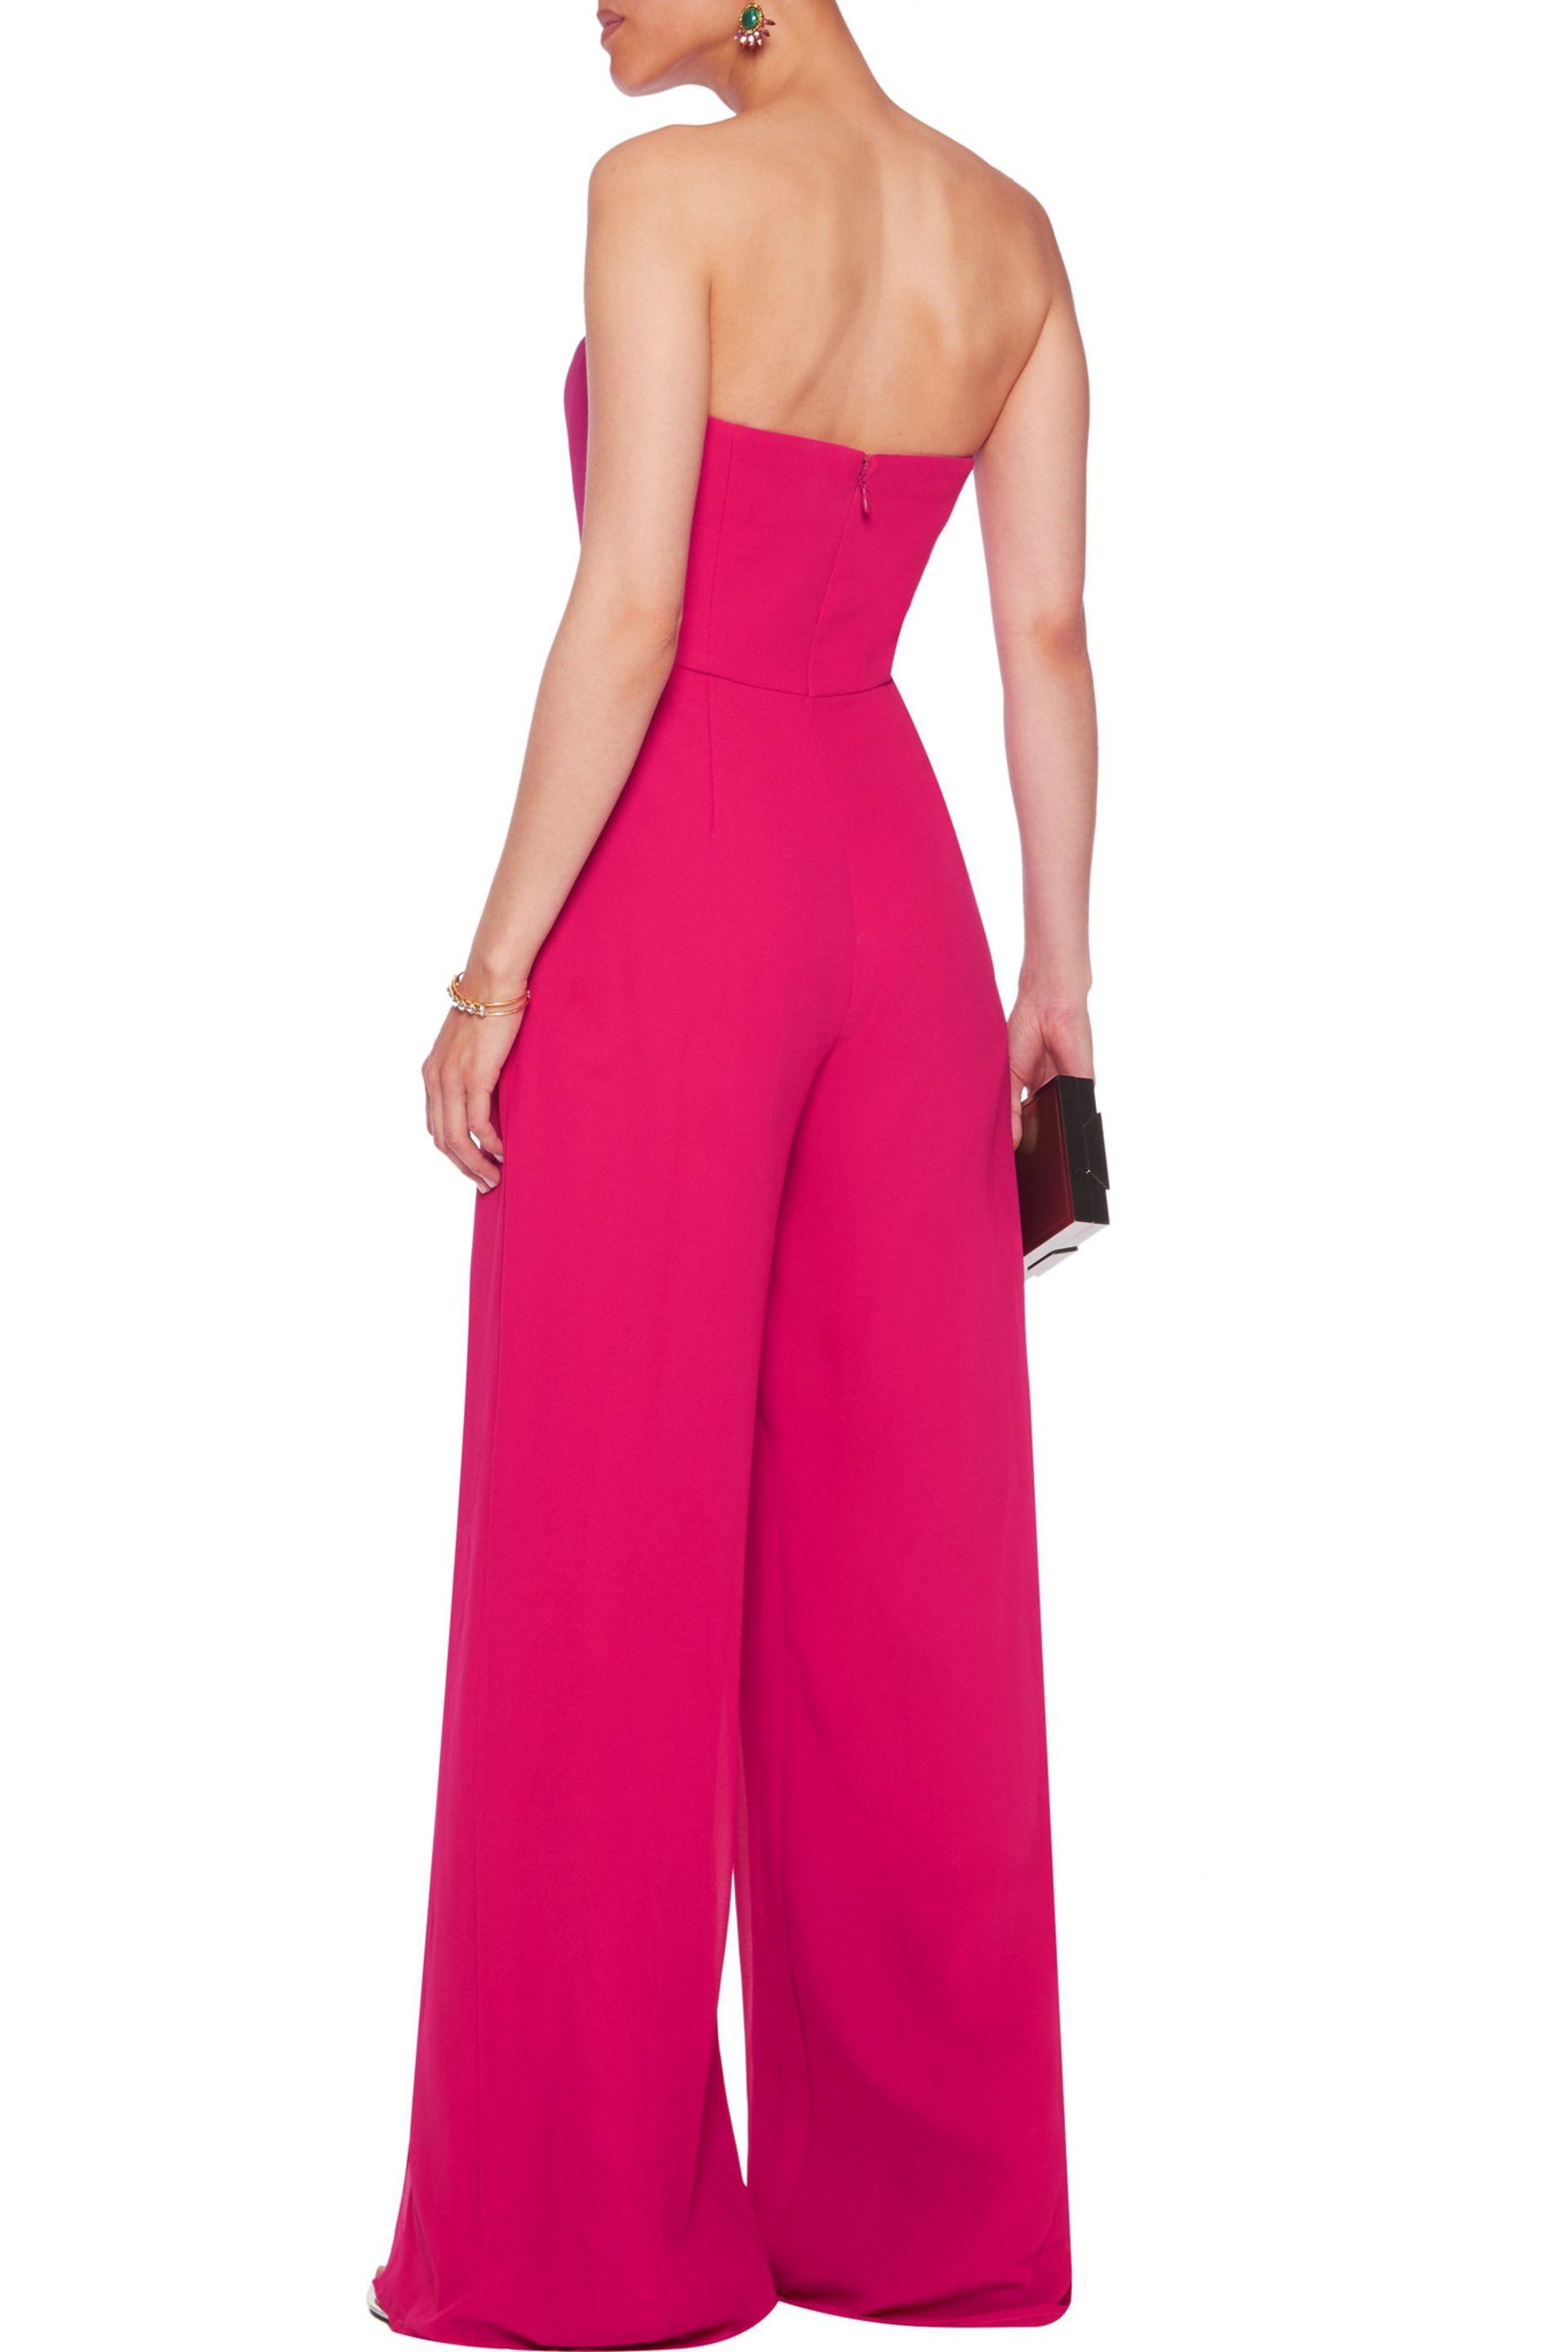 Lyst - Halston Heritage Strapless Georgette Jumpsuit Bright Pink in Pink